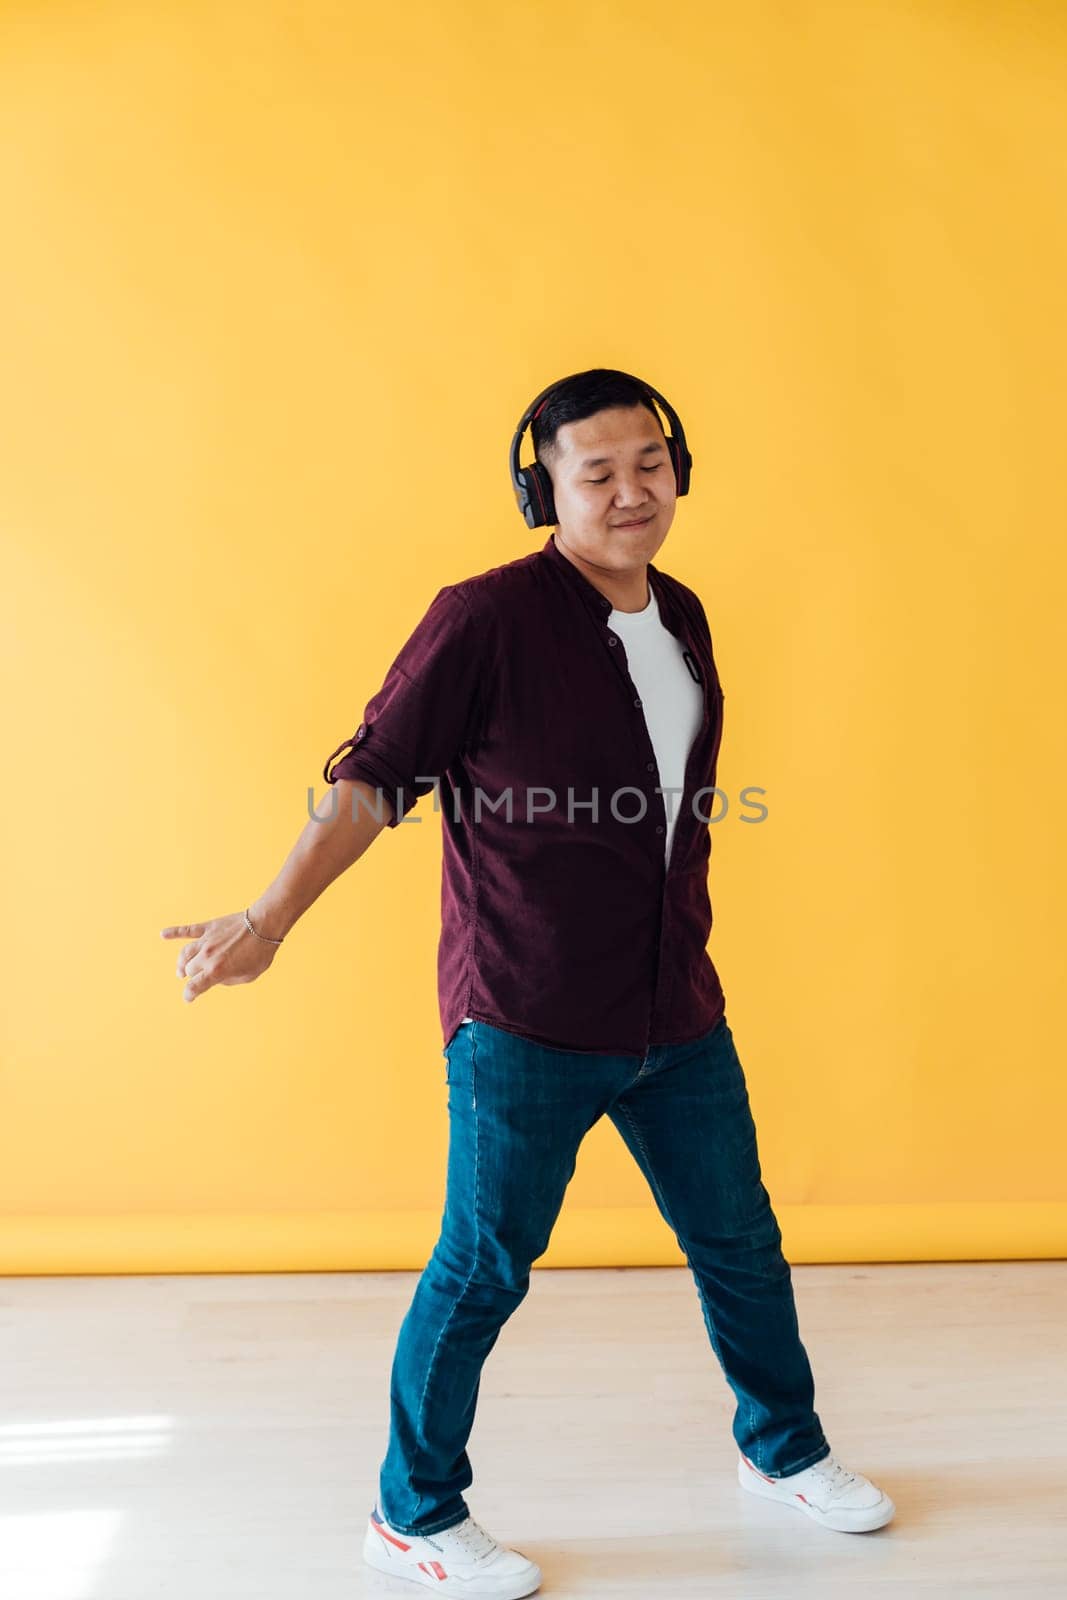 Enjoy The Rhytm. Cheerful American Guy In Wireless Headphones Listening Music And Dancing, Black Millennial Man Having